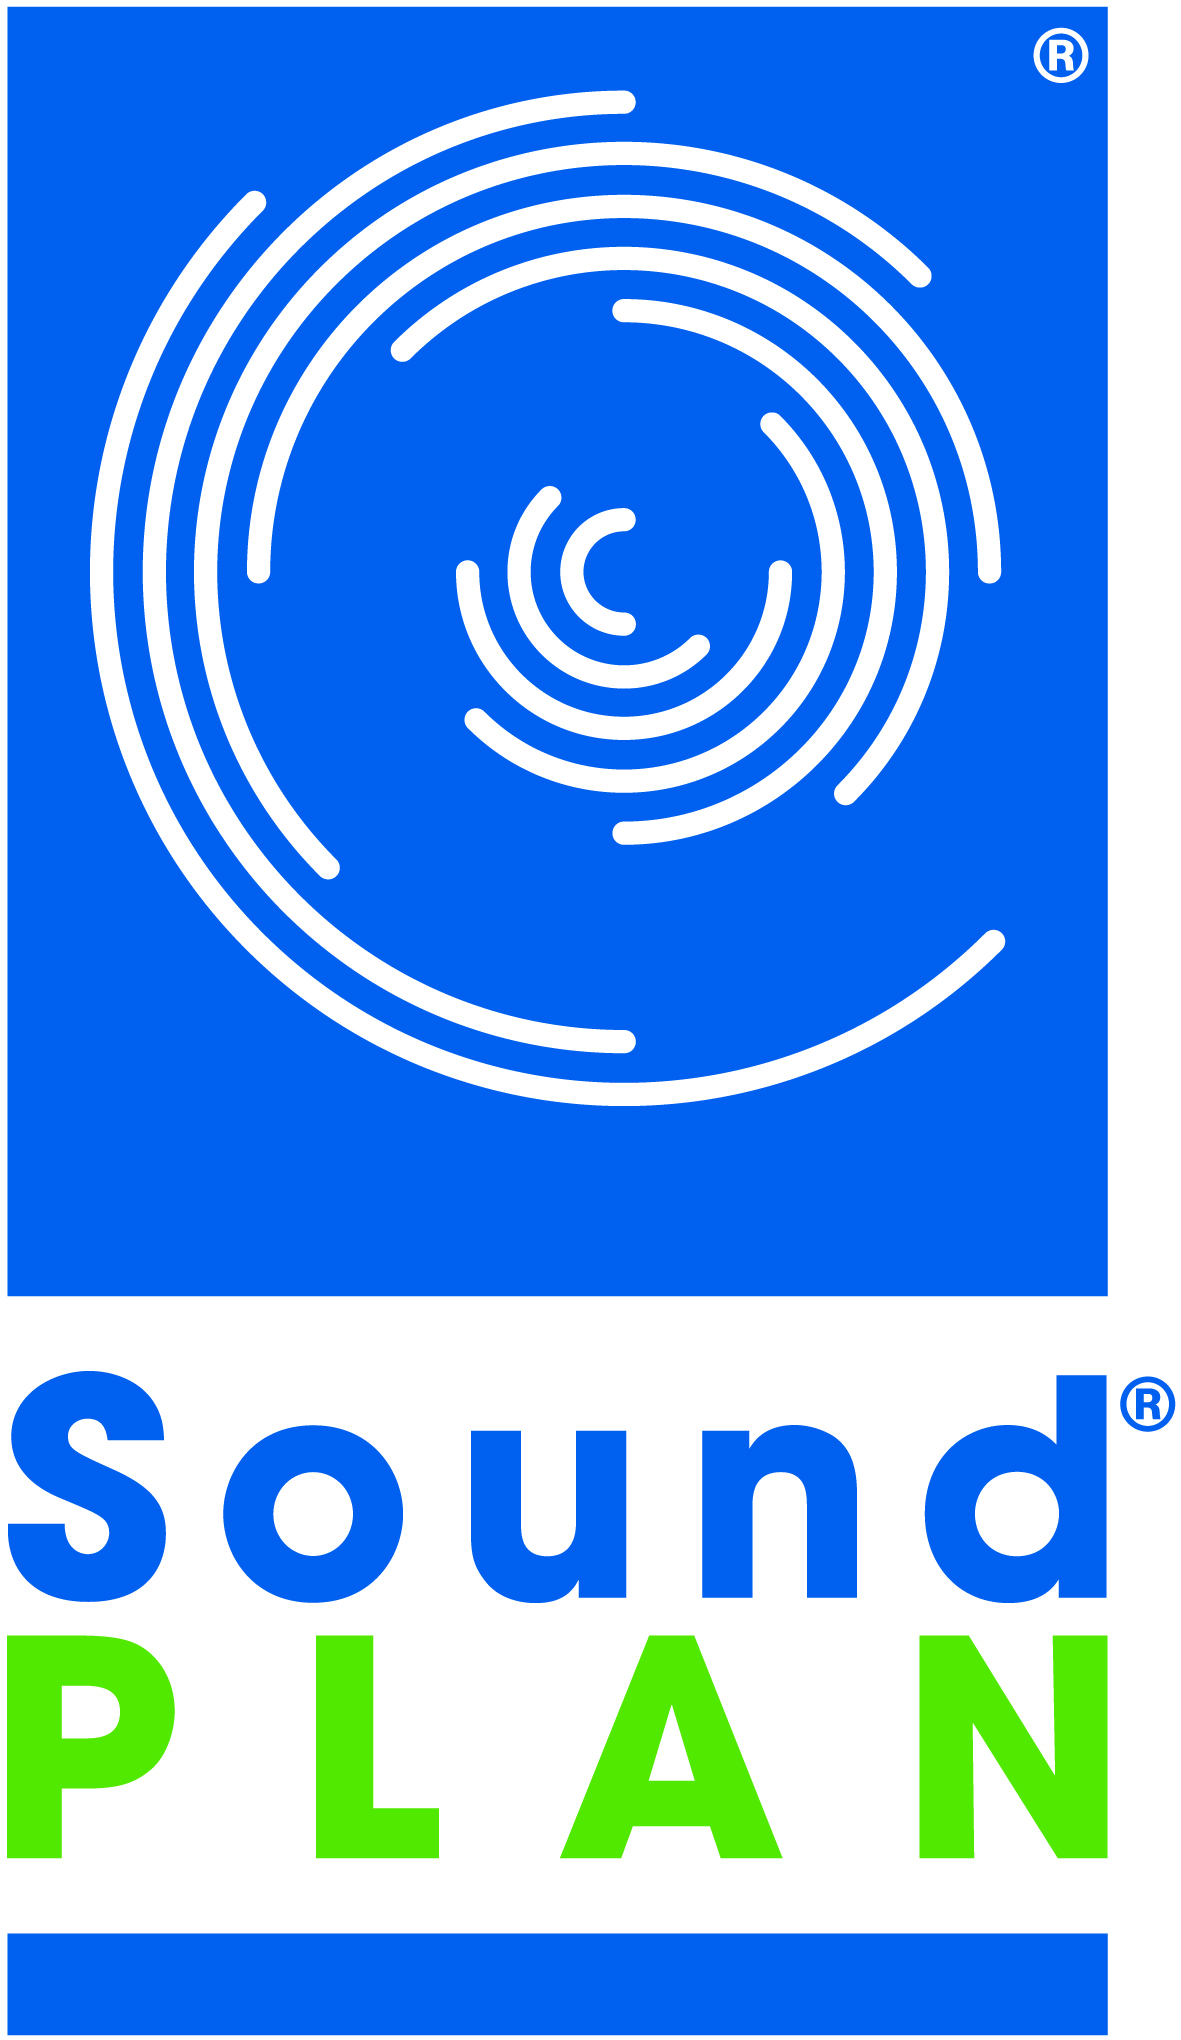 SoundPLAN